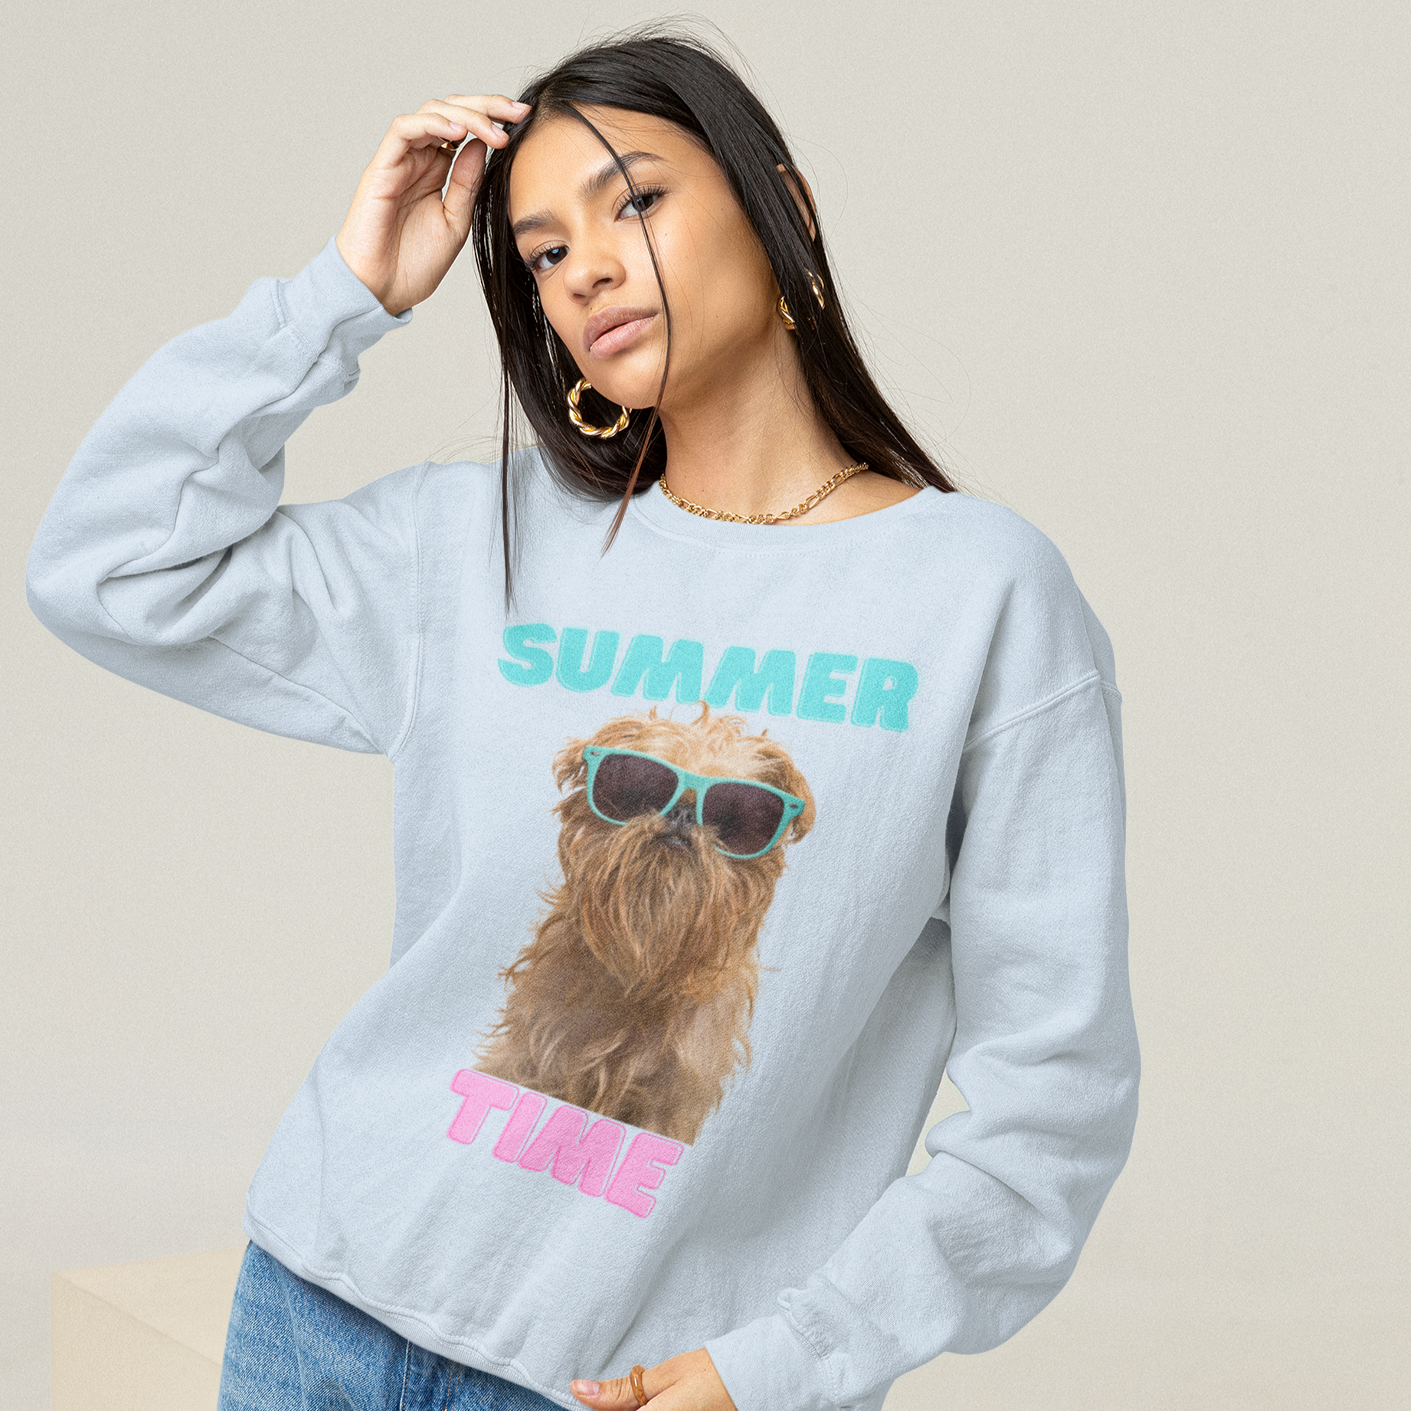 Dog "Summer Time" - Sweatshirt Unisex